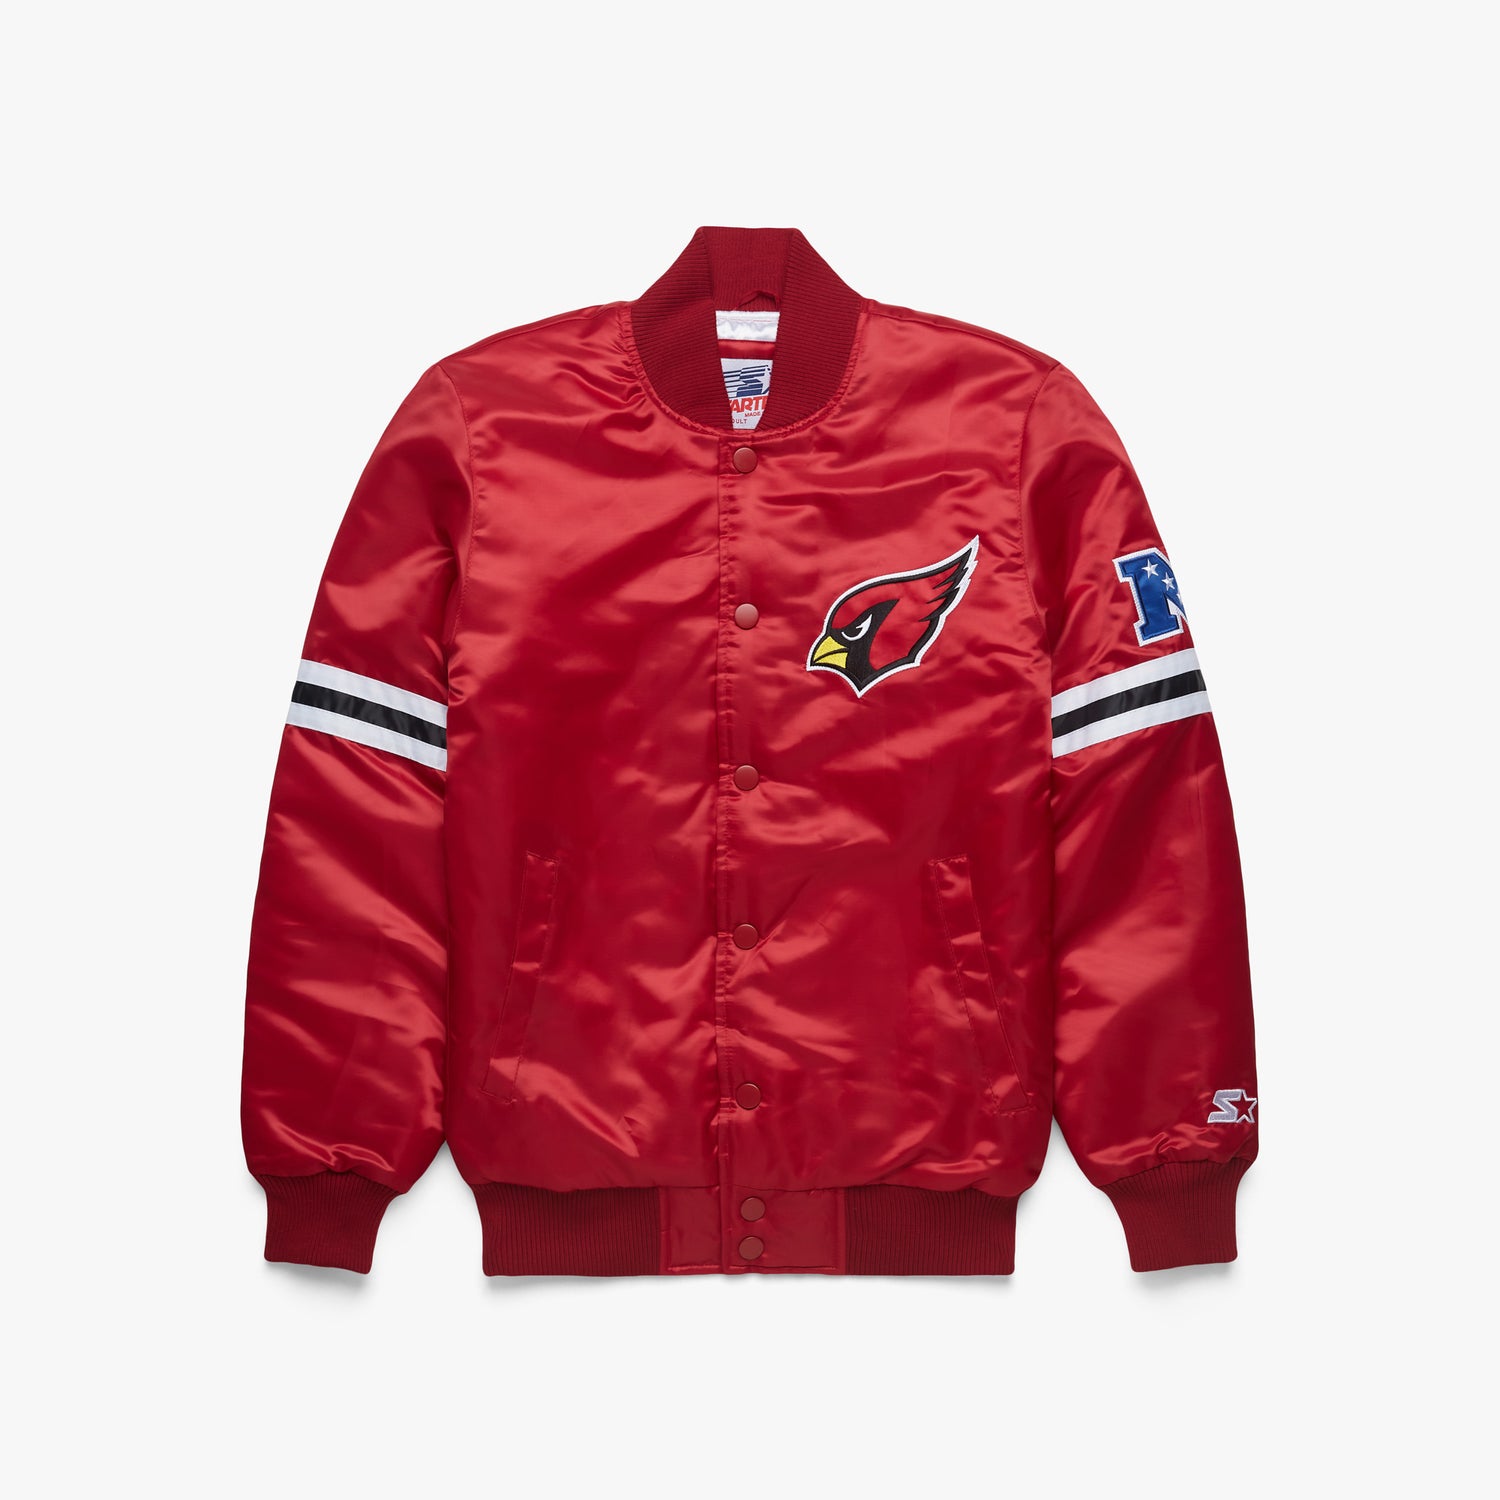 Arizona Cardinals Throwback Jerseys, Vintage NFL Gear